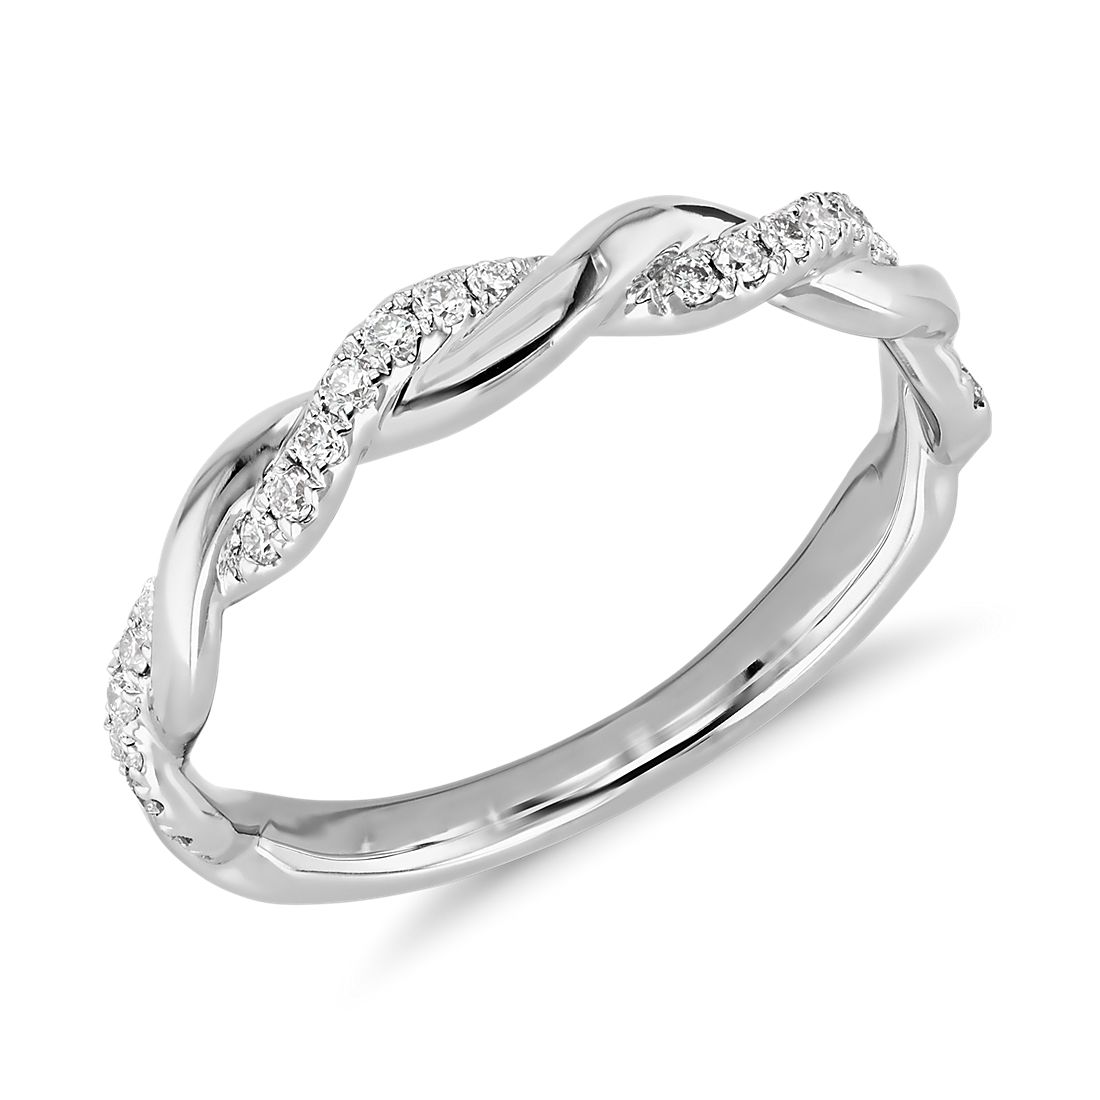 ZAC ZAC POSEN Twisting Diamond Ring in 14k White Gold (2.6 mm, 1/5 ct. tw.)